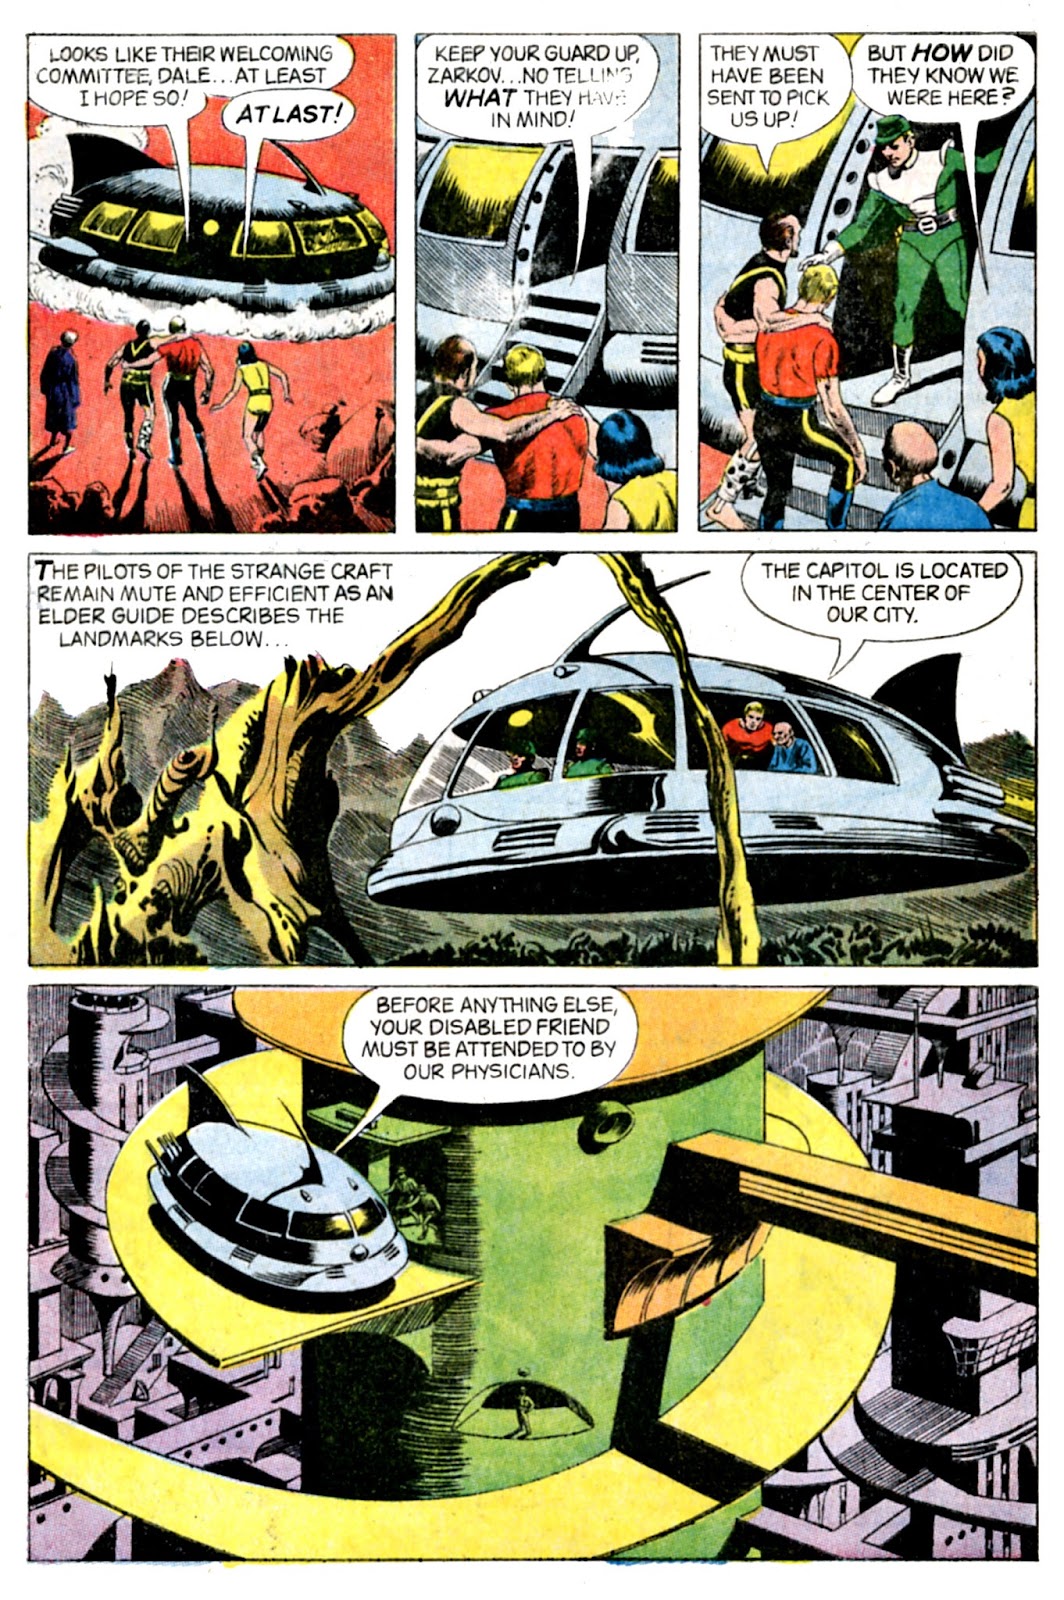 Flash Gordon (1966) issue 8 - Page 3